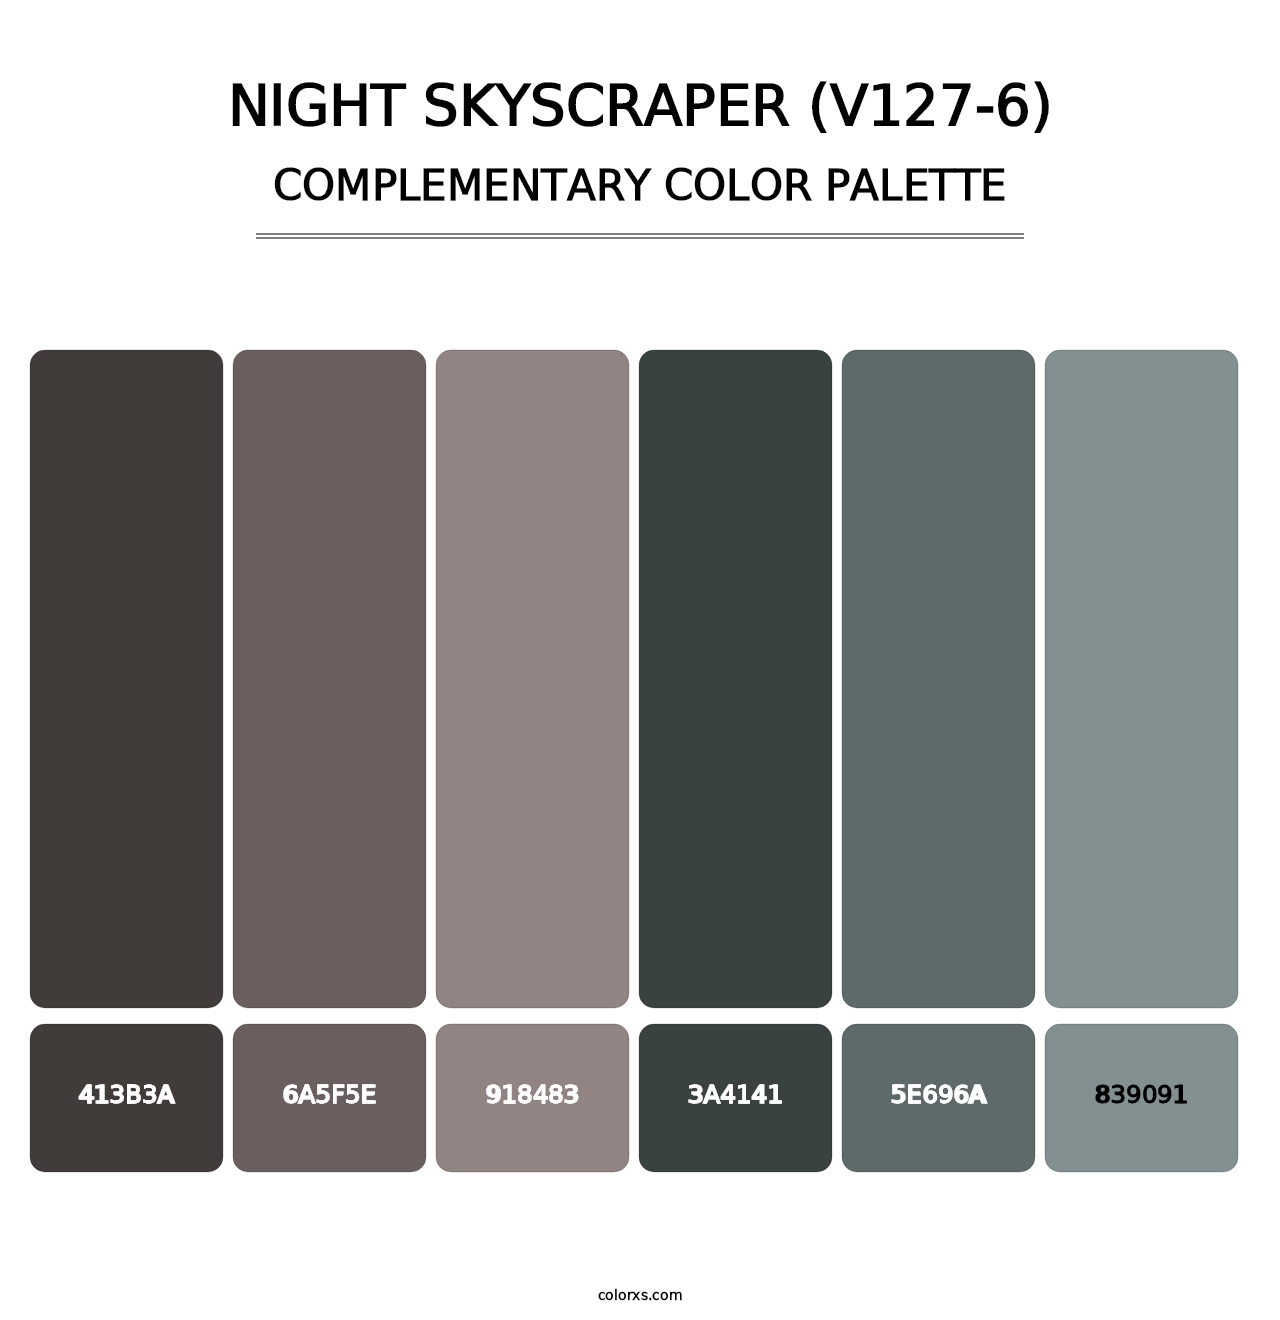 Night Skyscraper (V127-6) - Complementary Color Palette